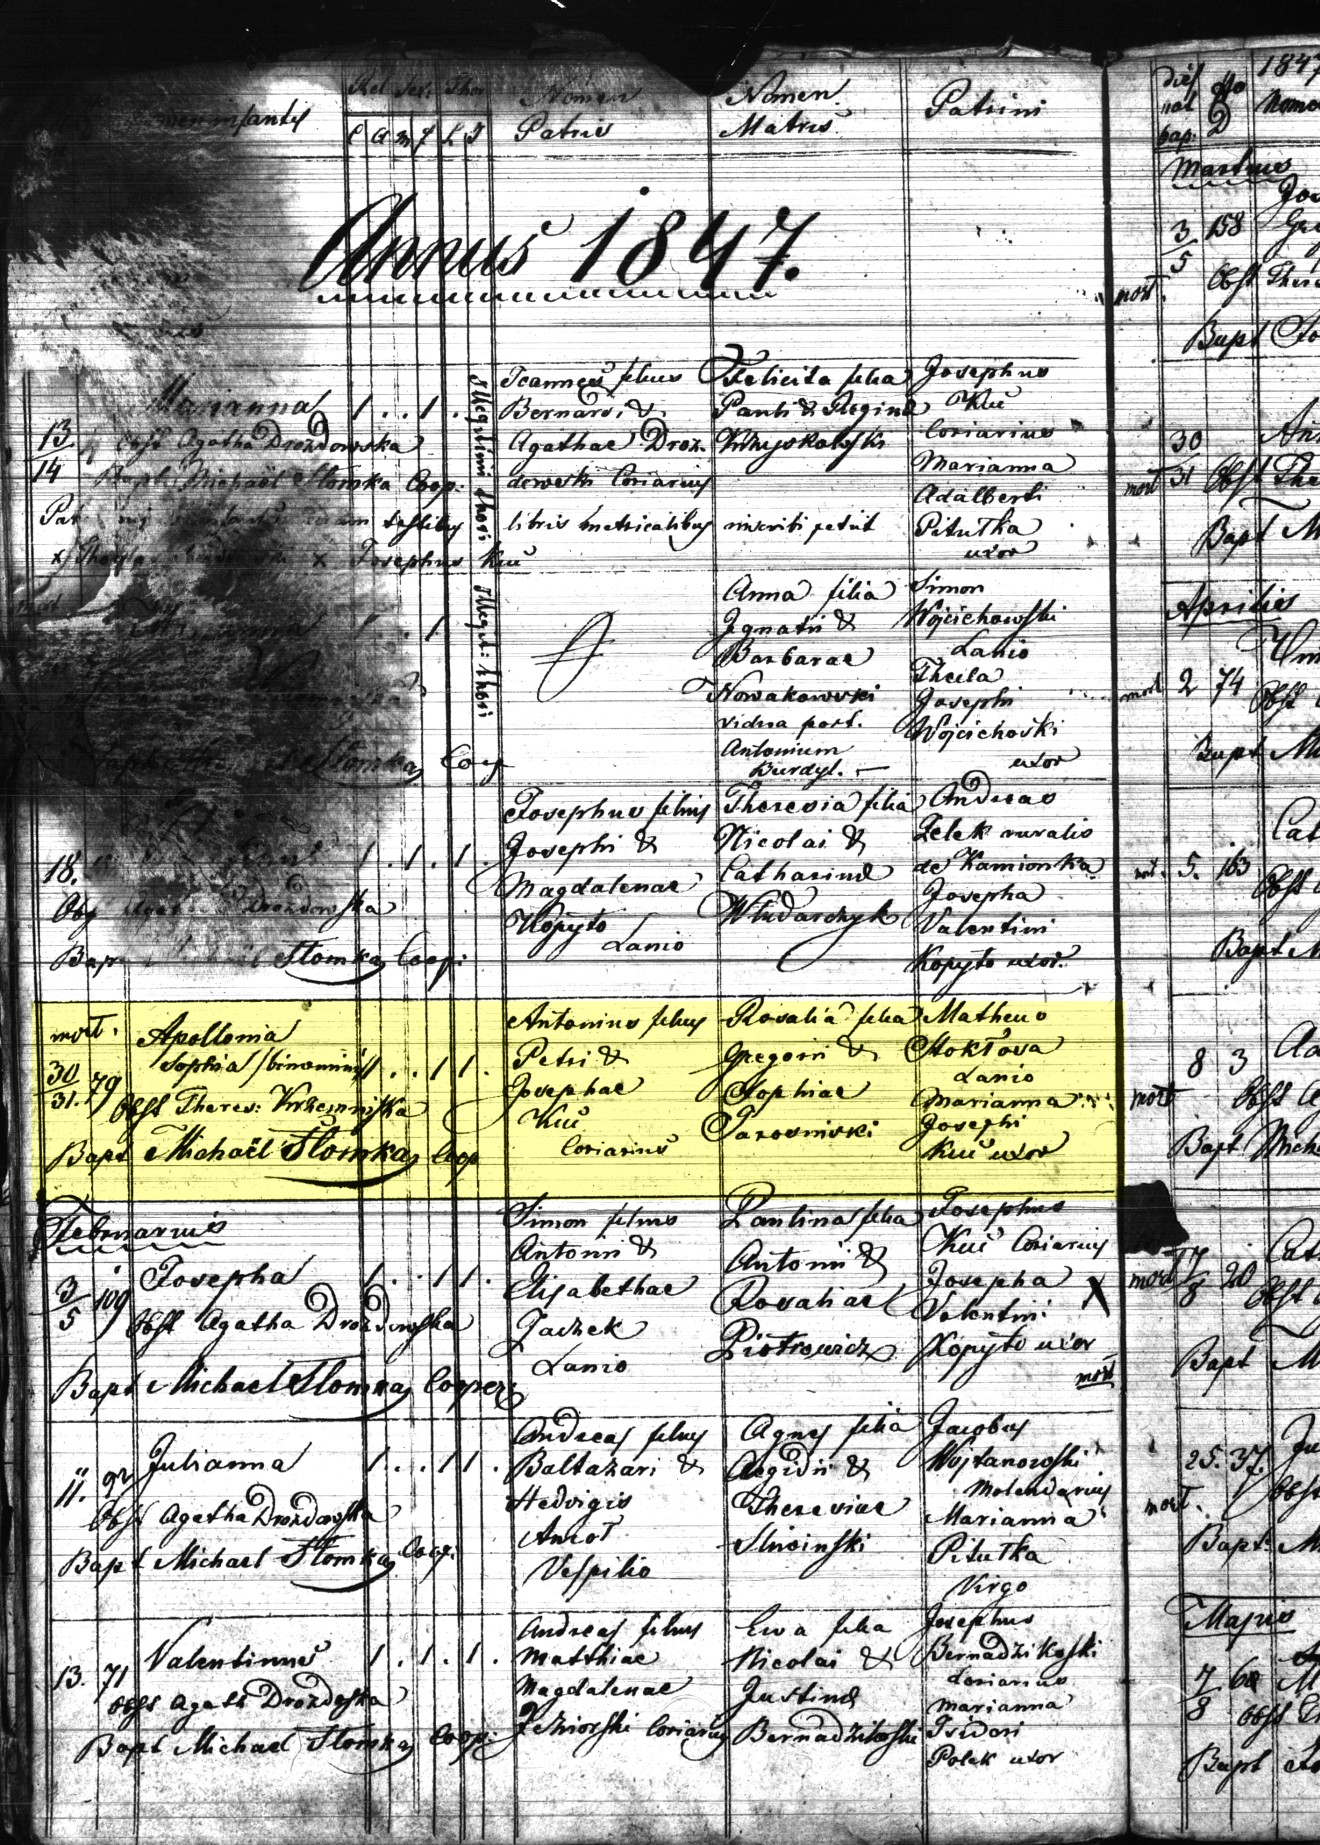 1847 Apollinia Kuc Baptism Parish Register.jpg